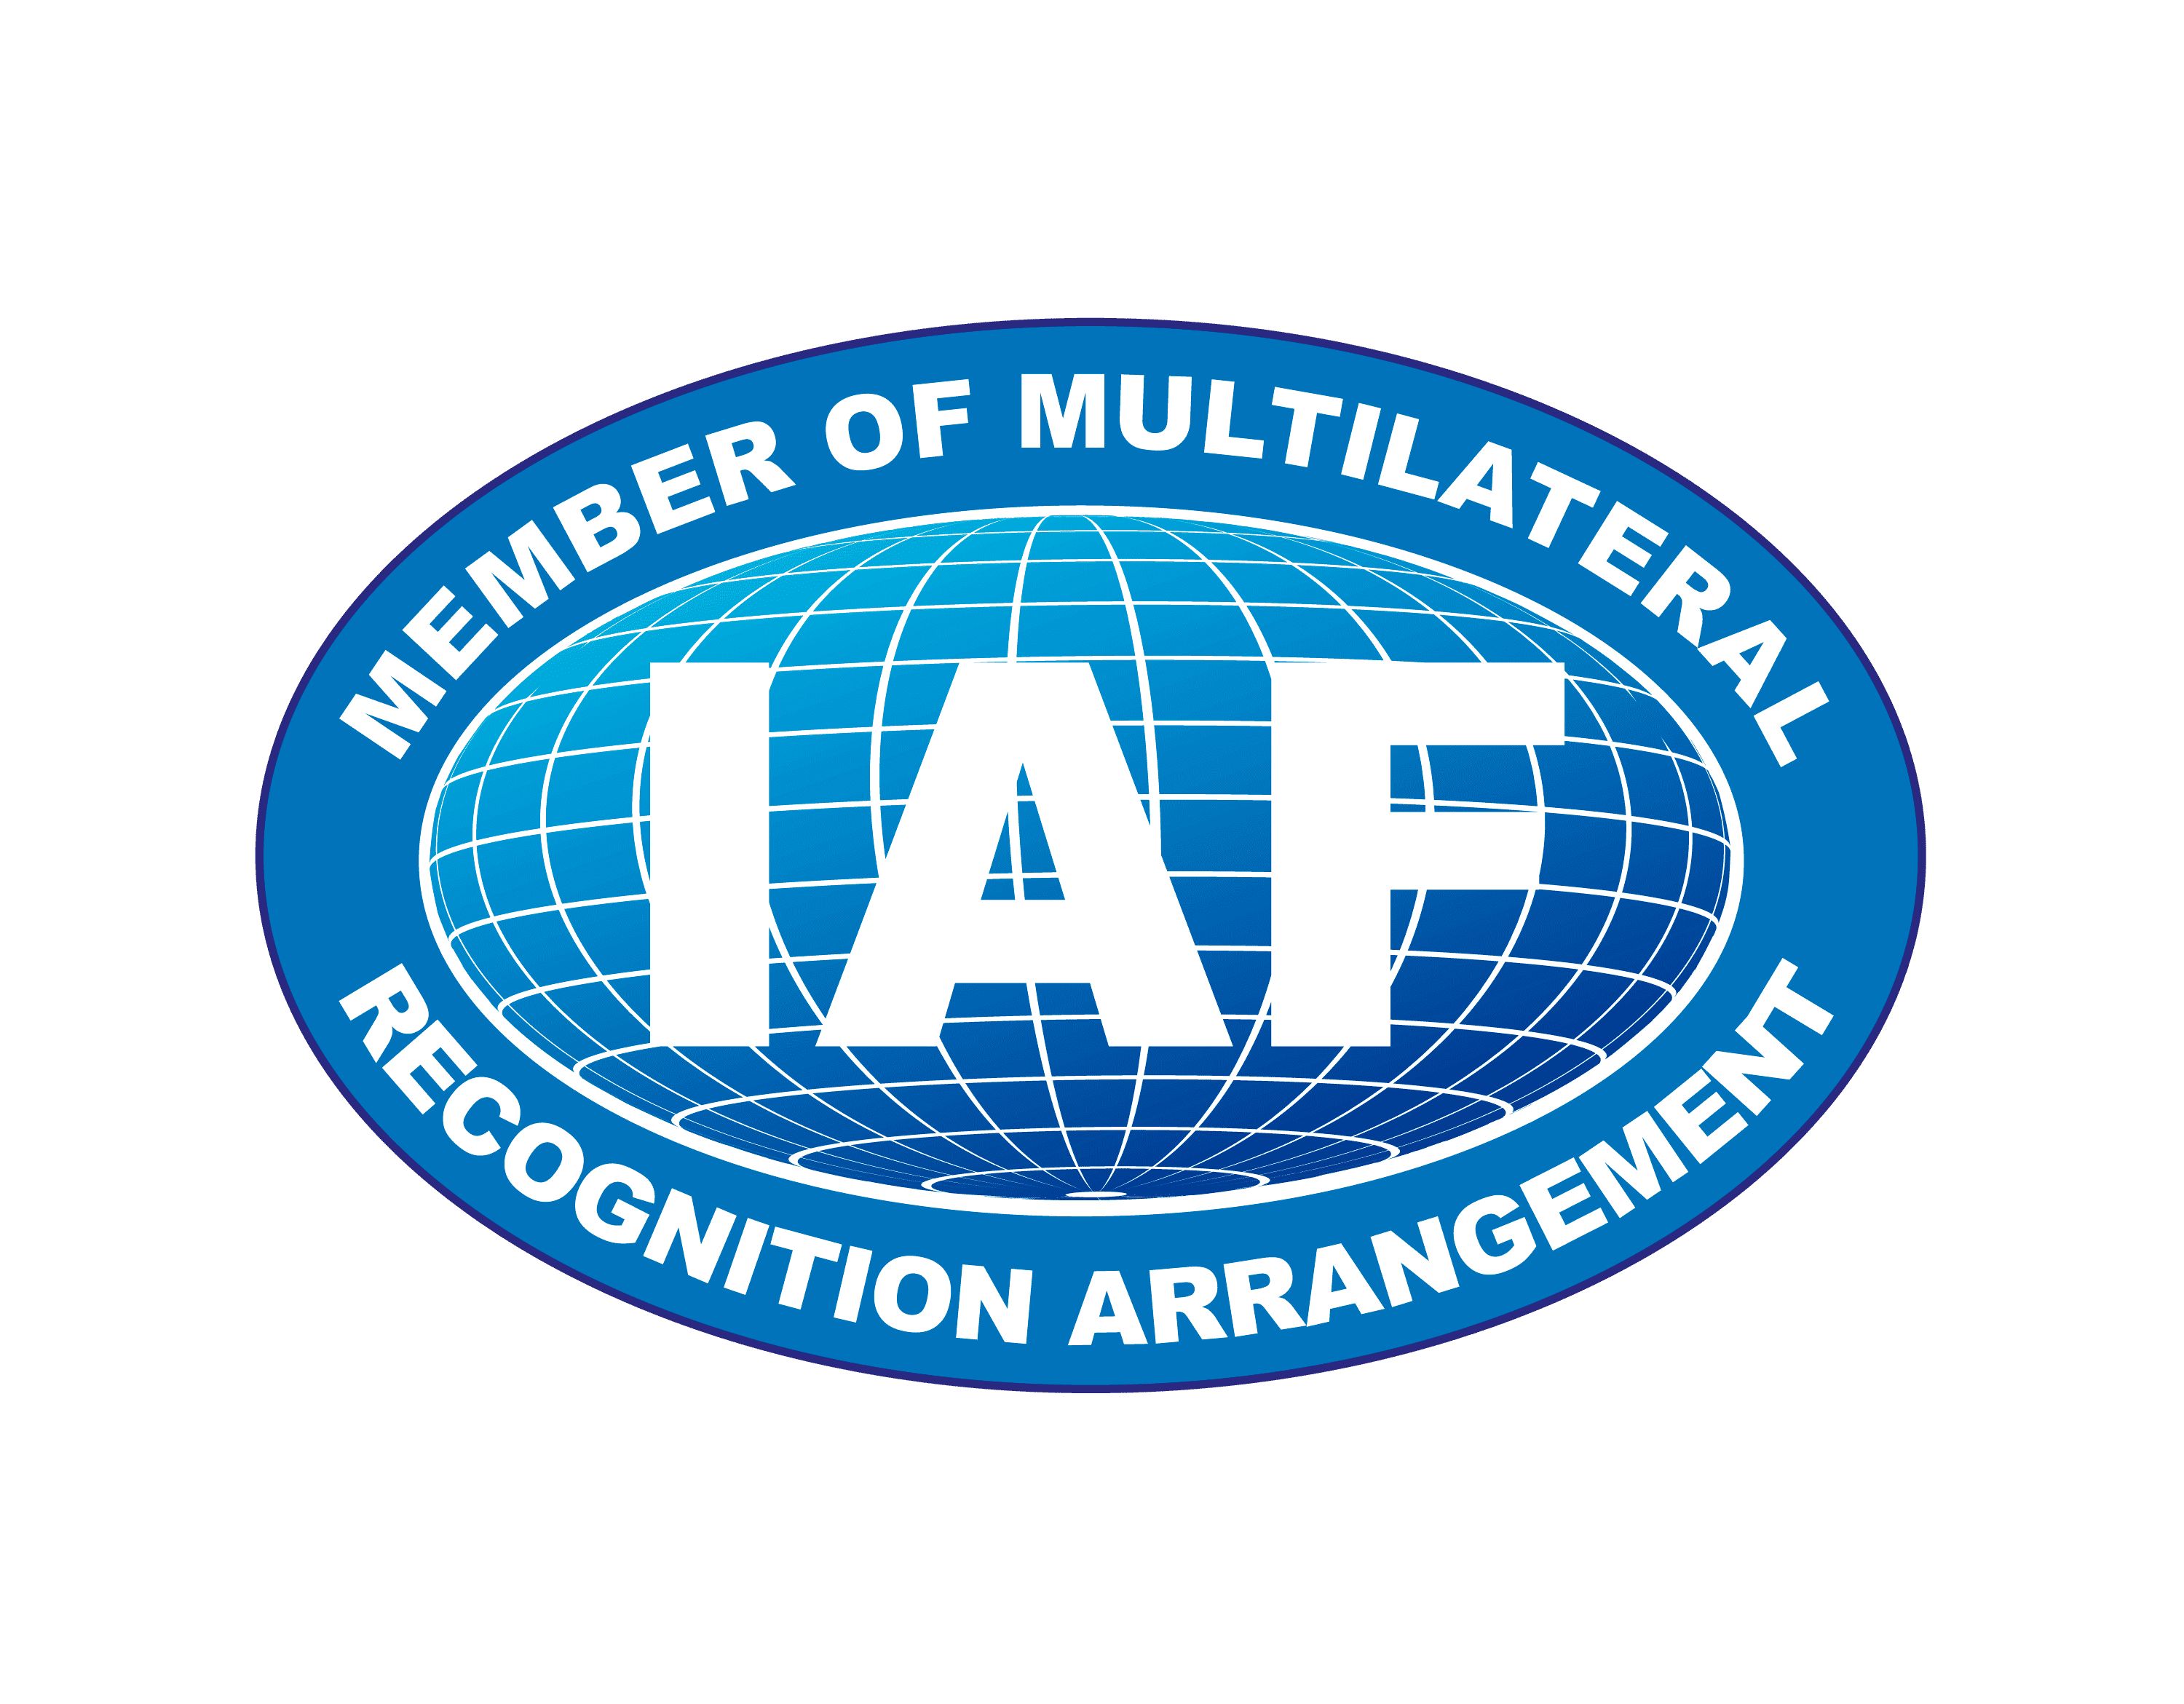 IAF-Member-of-Multilateral-Recogniton-Arrangement